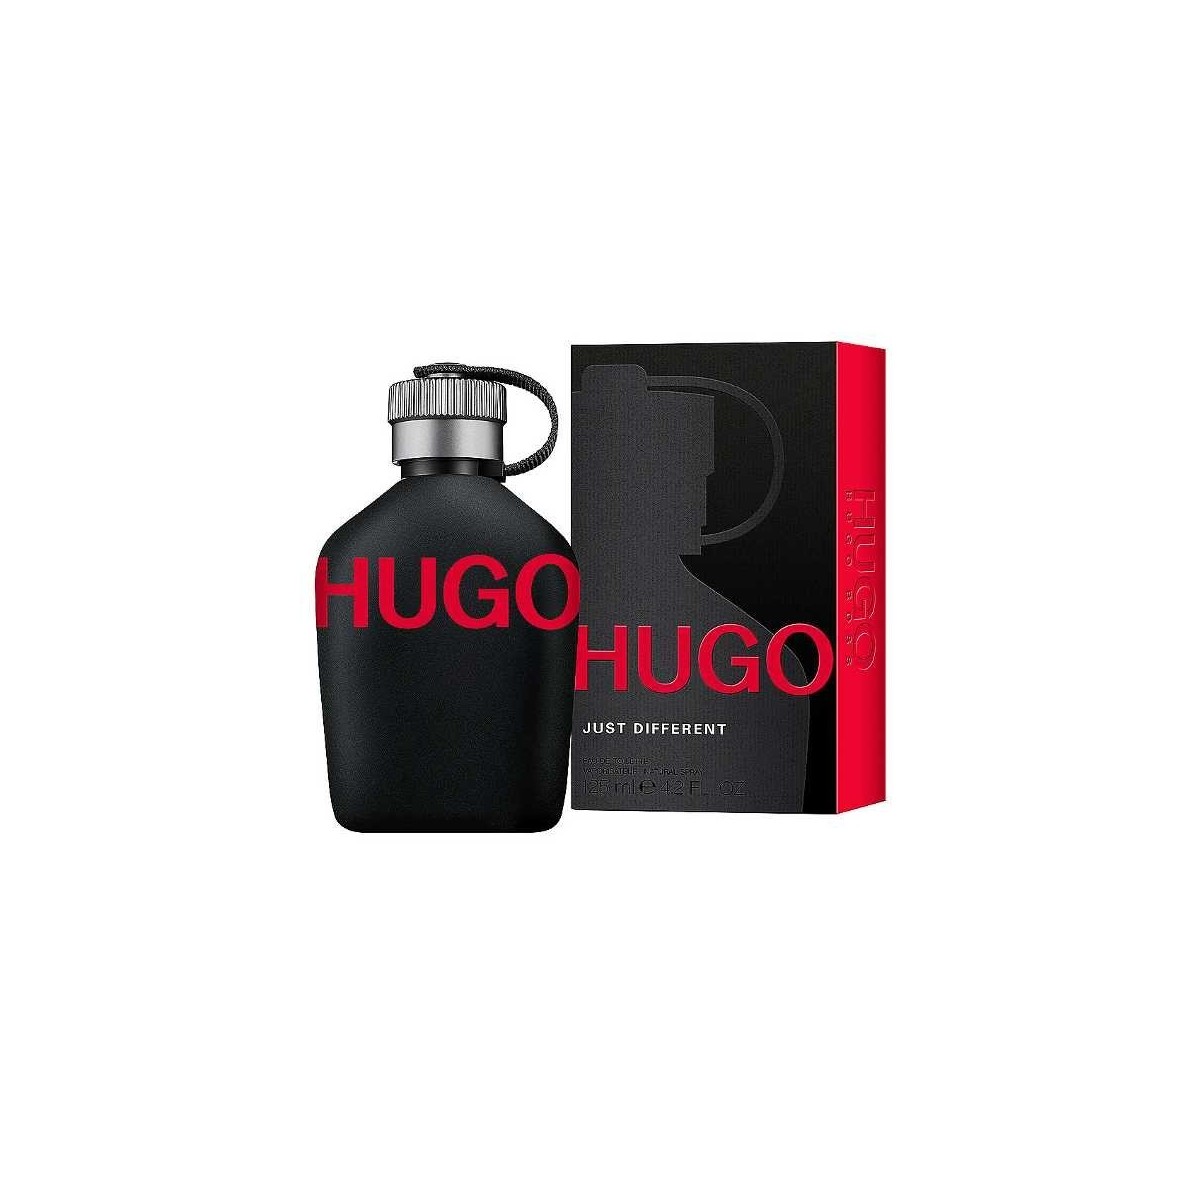 Hugo Boss Just Different Eau de Toilette 125ml spray